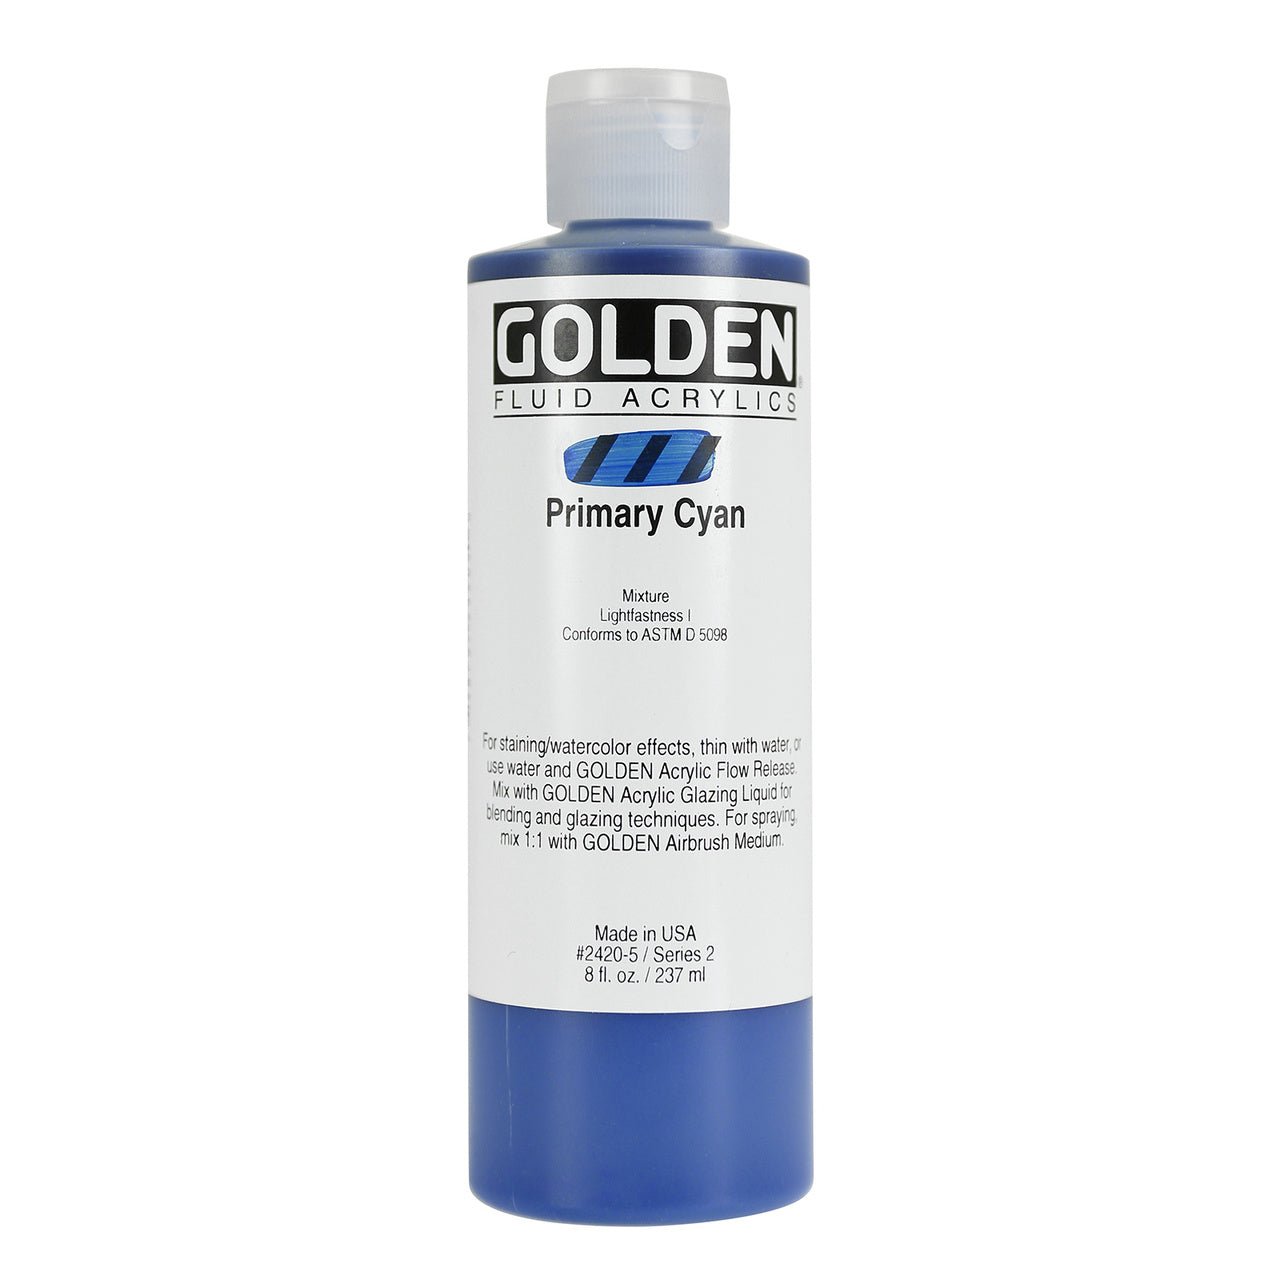 Golden Fluid Acrylic Primary Cyan 8 oz - merriartist.com